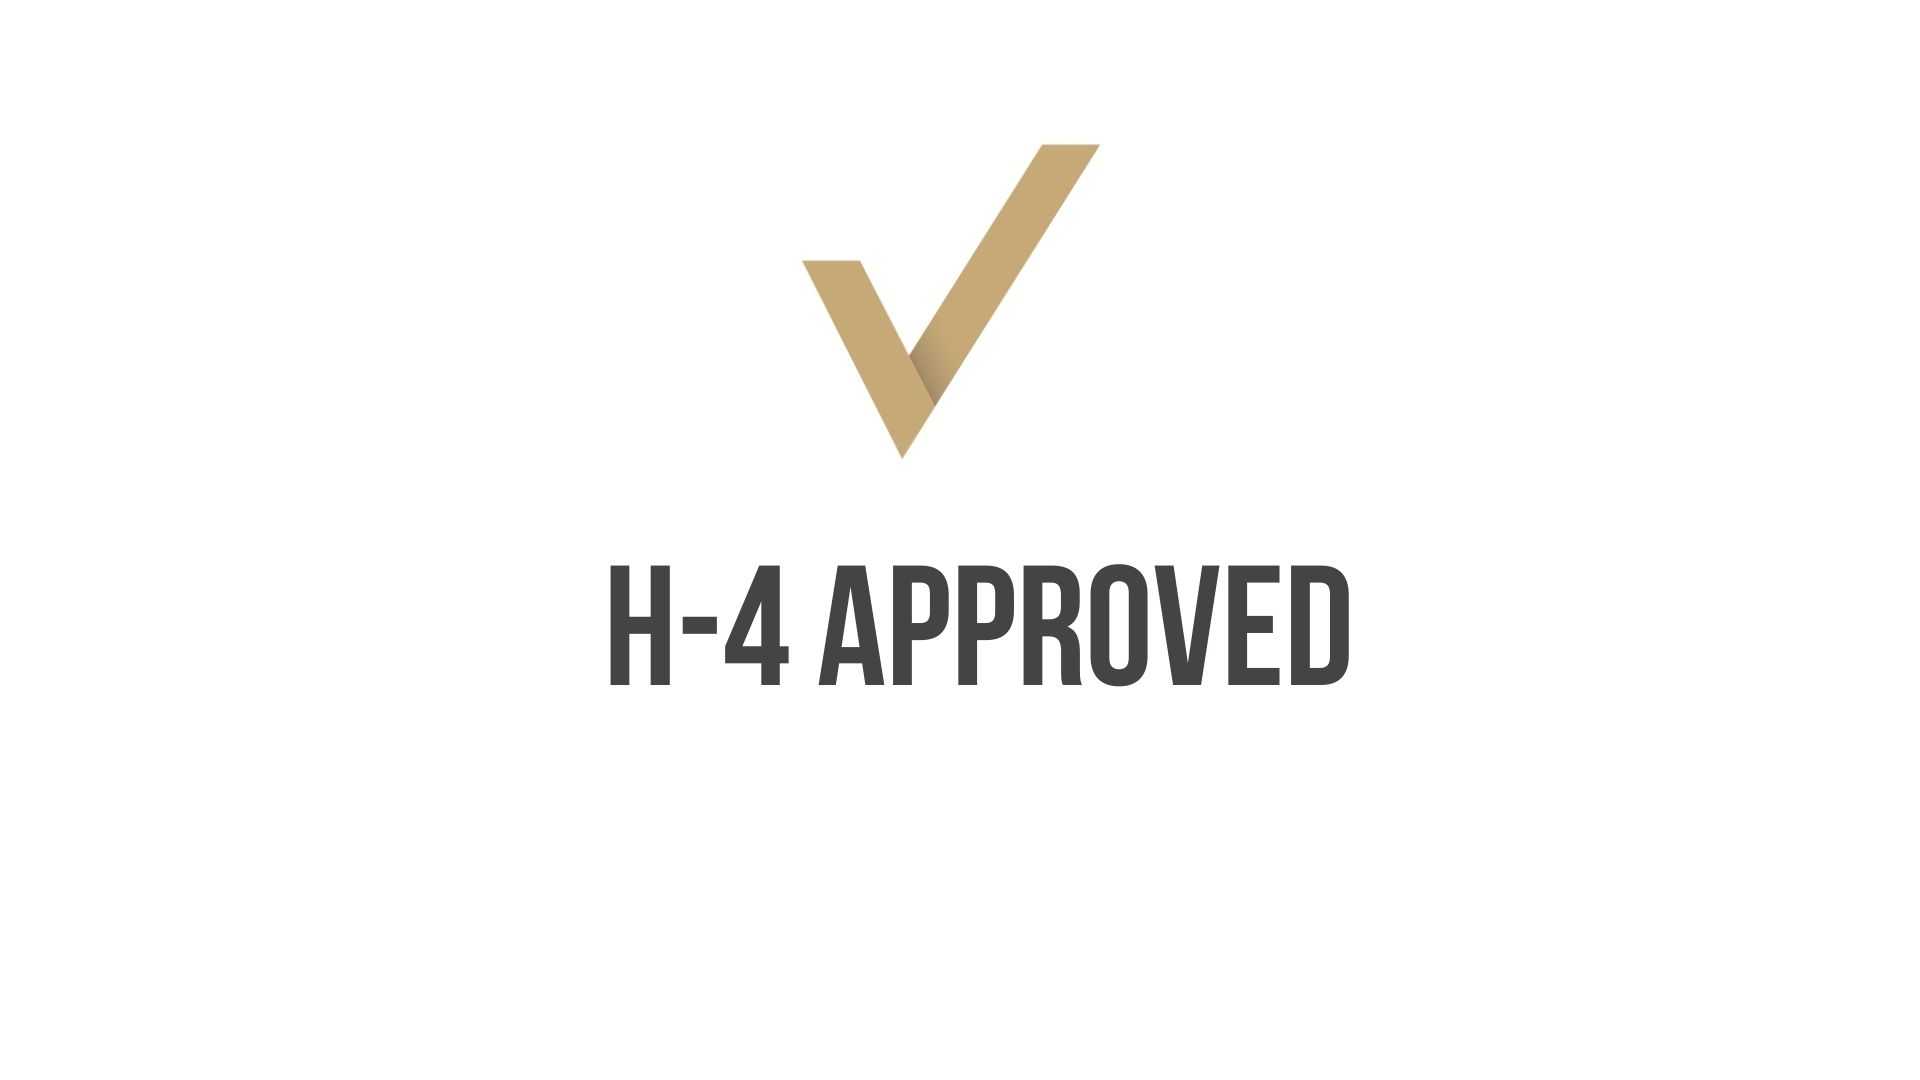 H-4 Approval for Child of H-1B Visa Holder